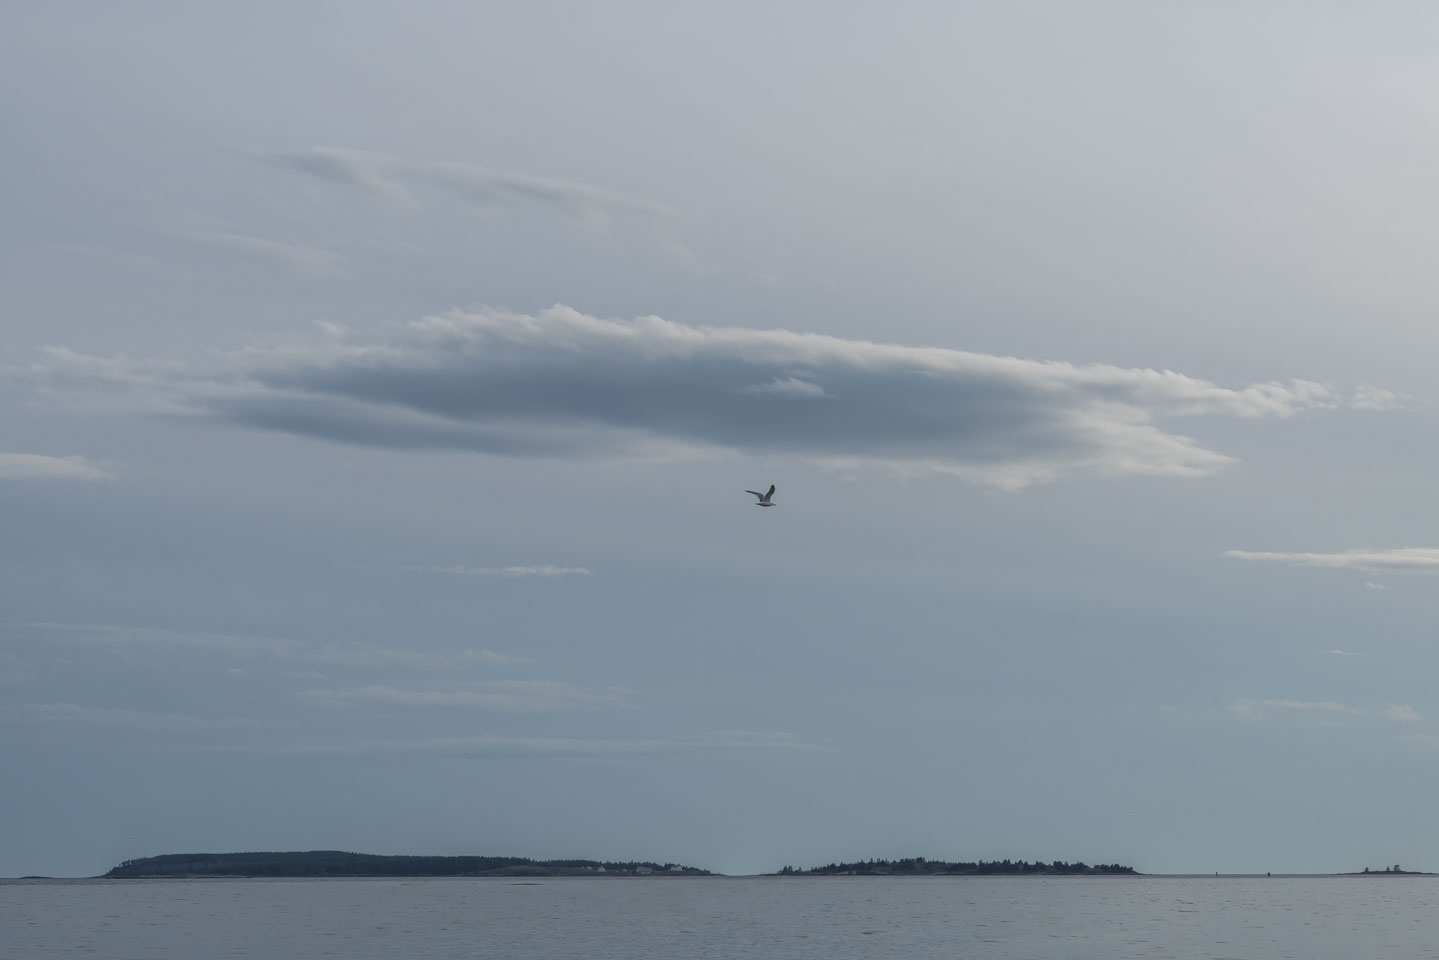 A single bird flying over the ocean